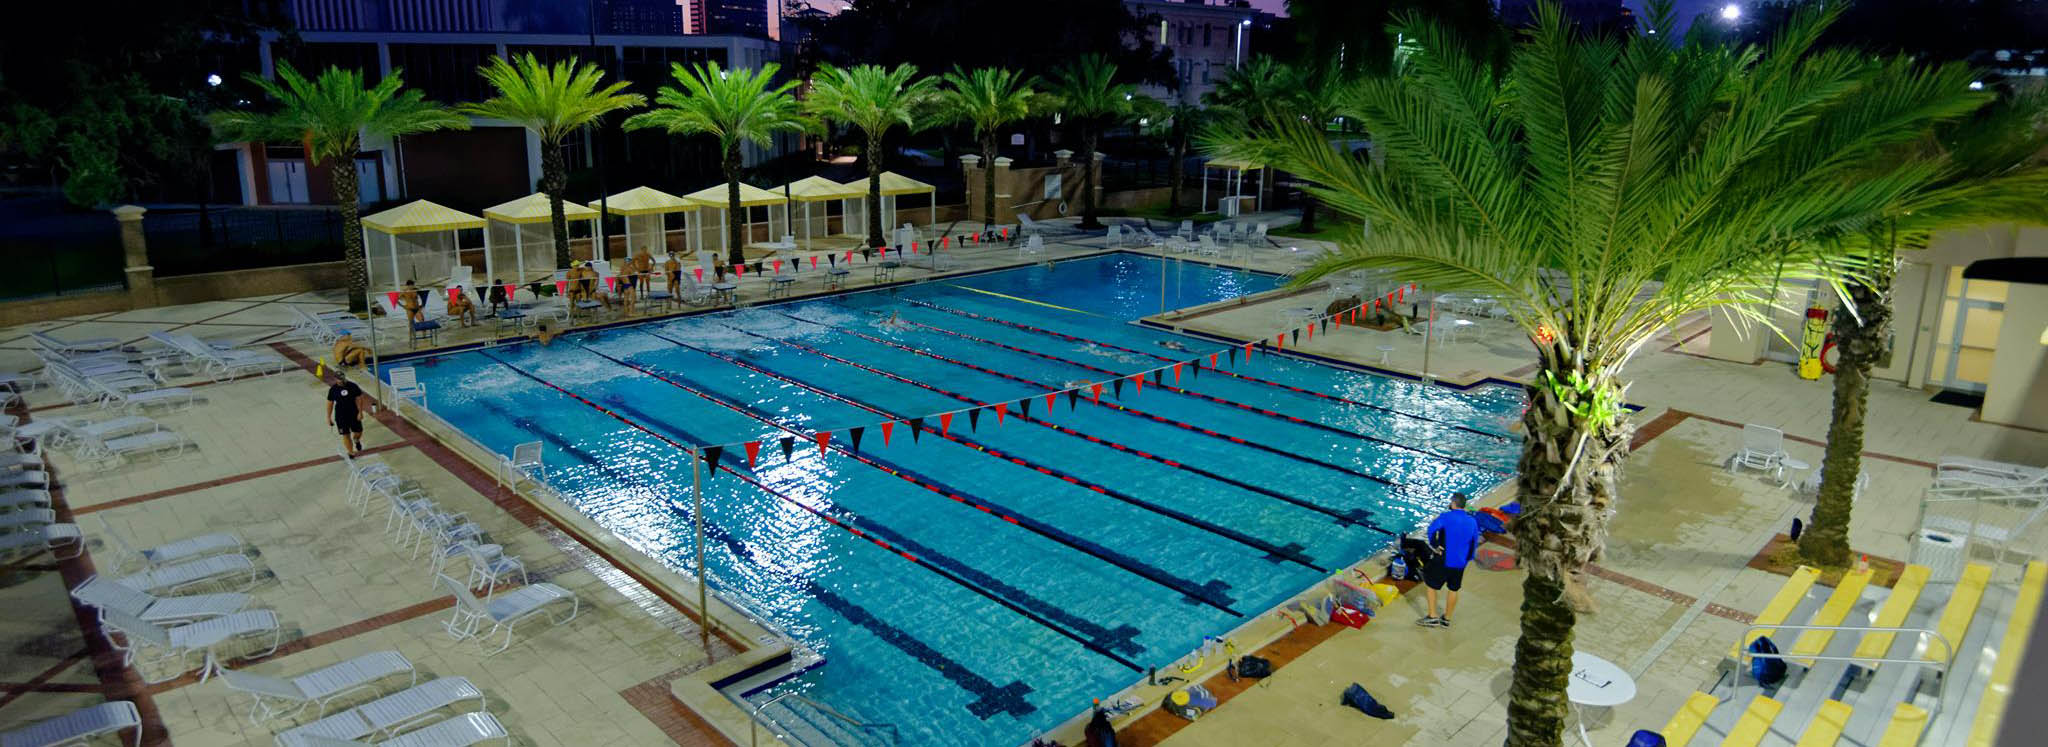 University of Tampa pool photo